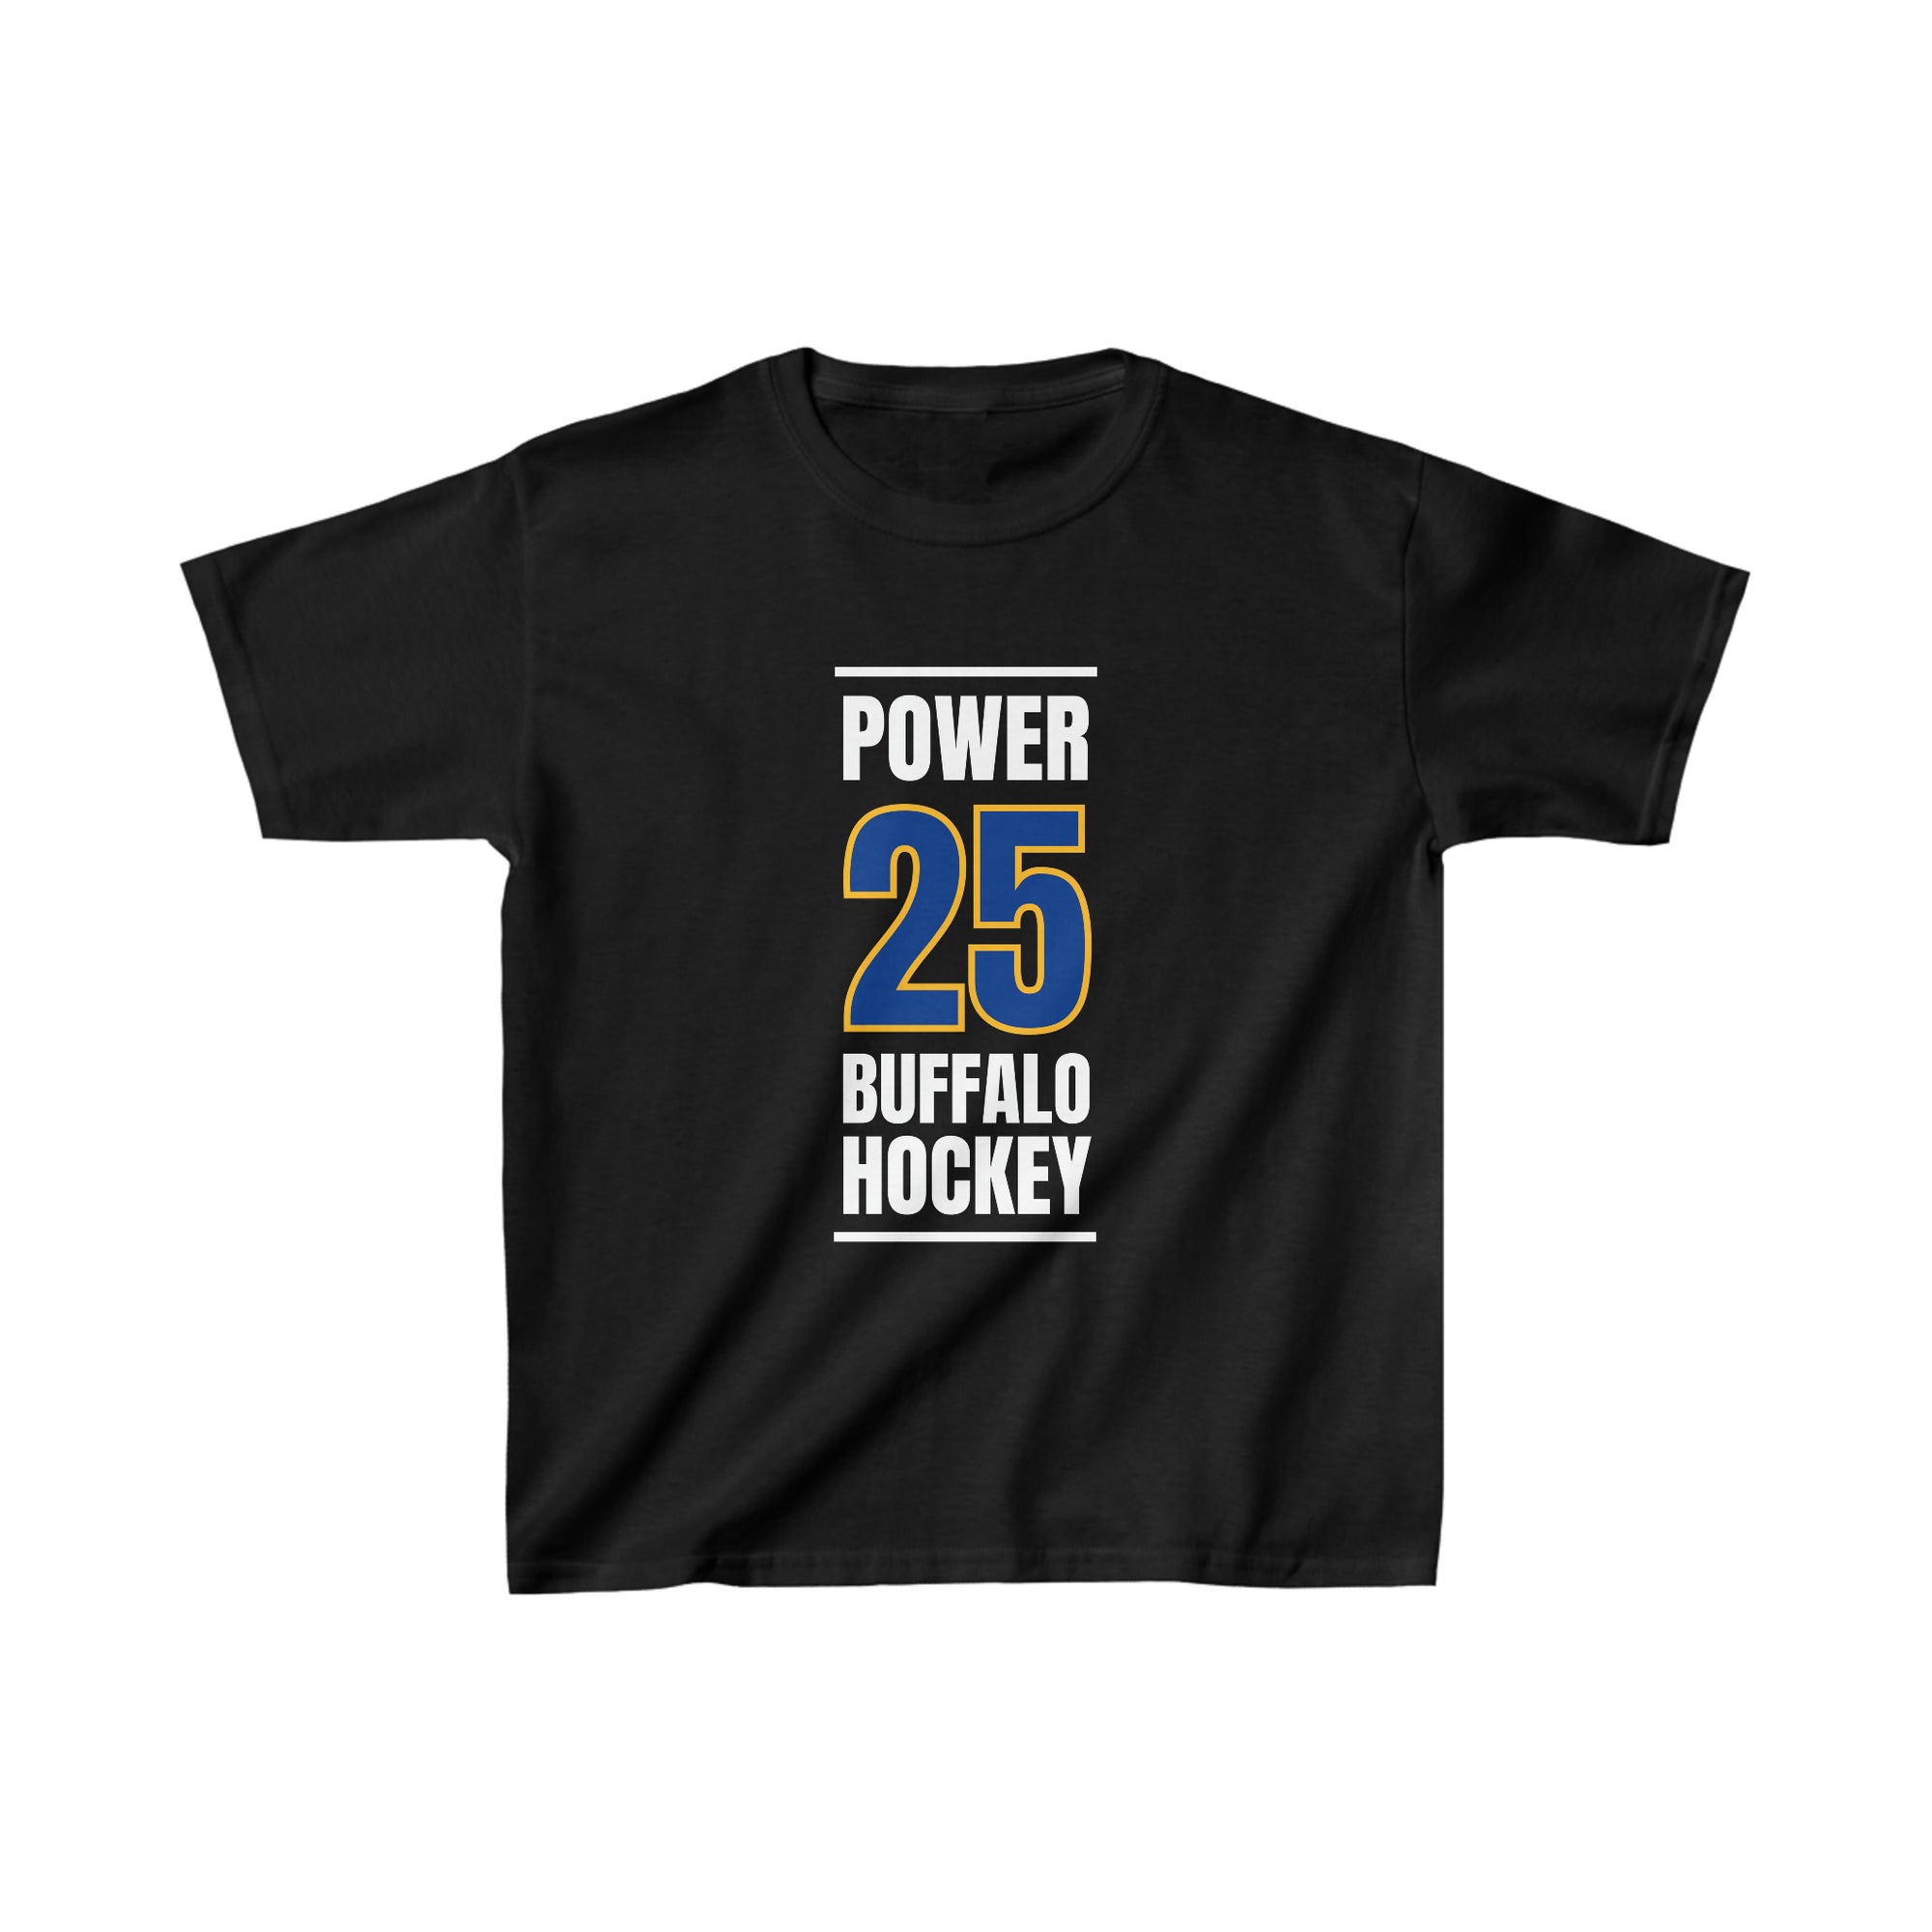 Power 25 Buffalo Hockey Royal Blue Vertical Design Kids Tee